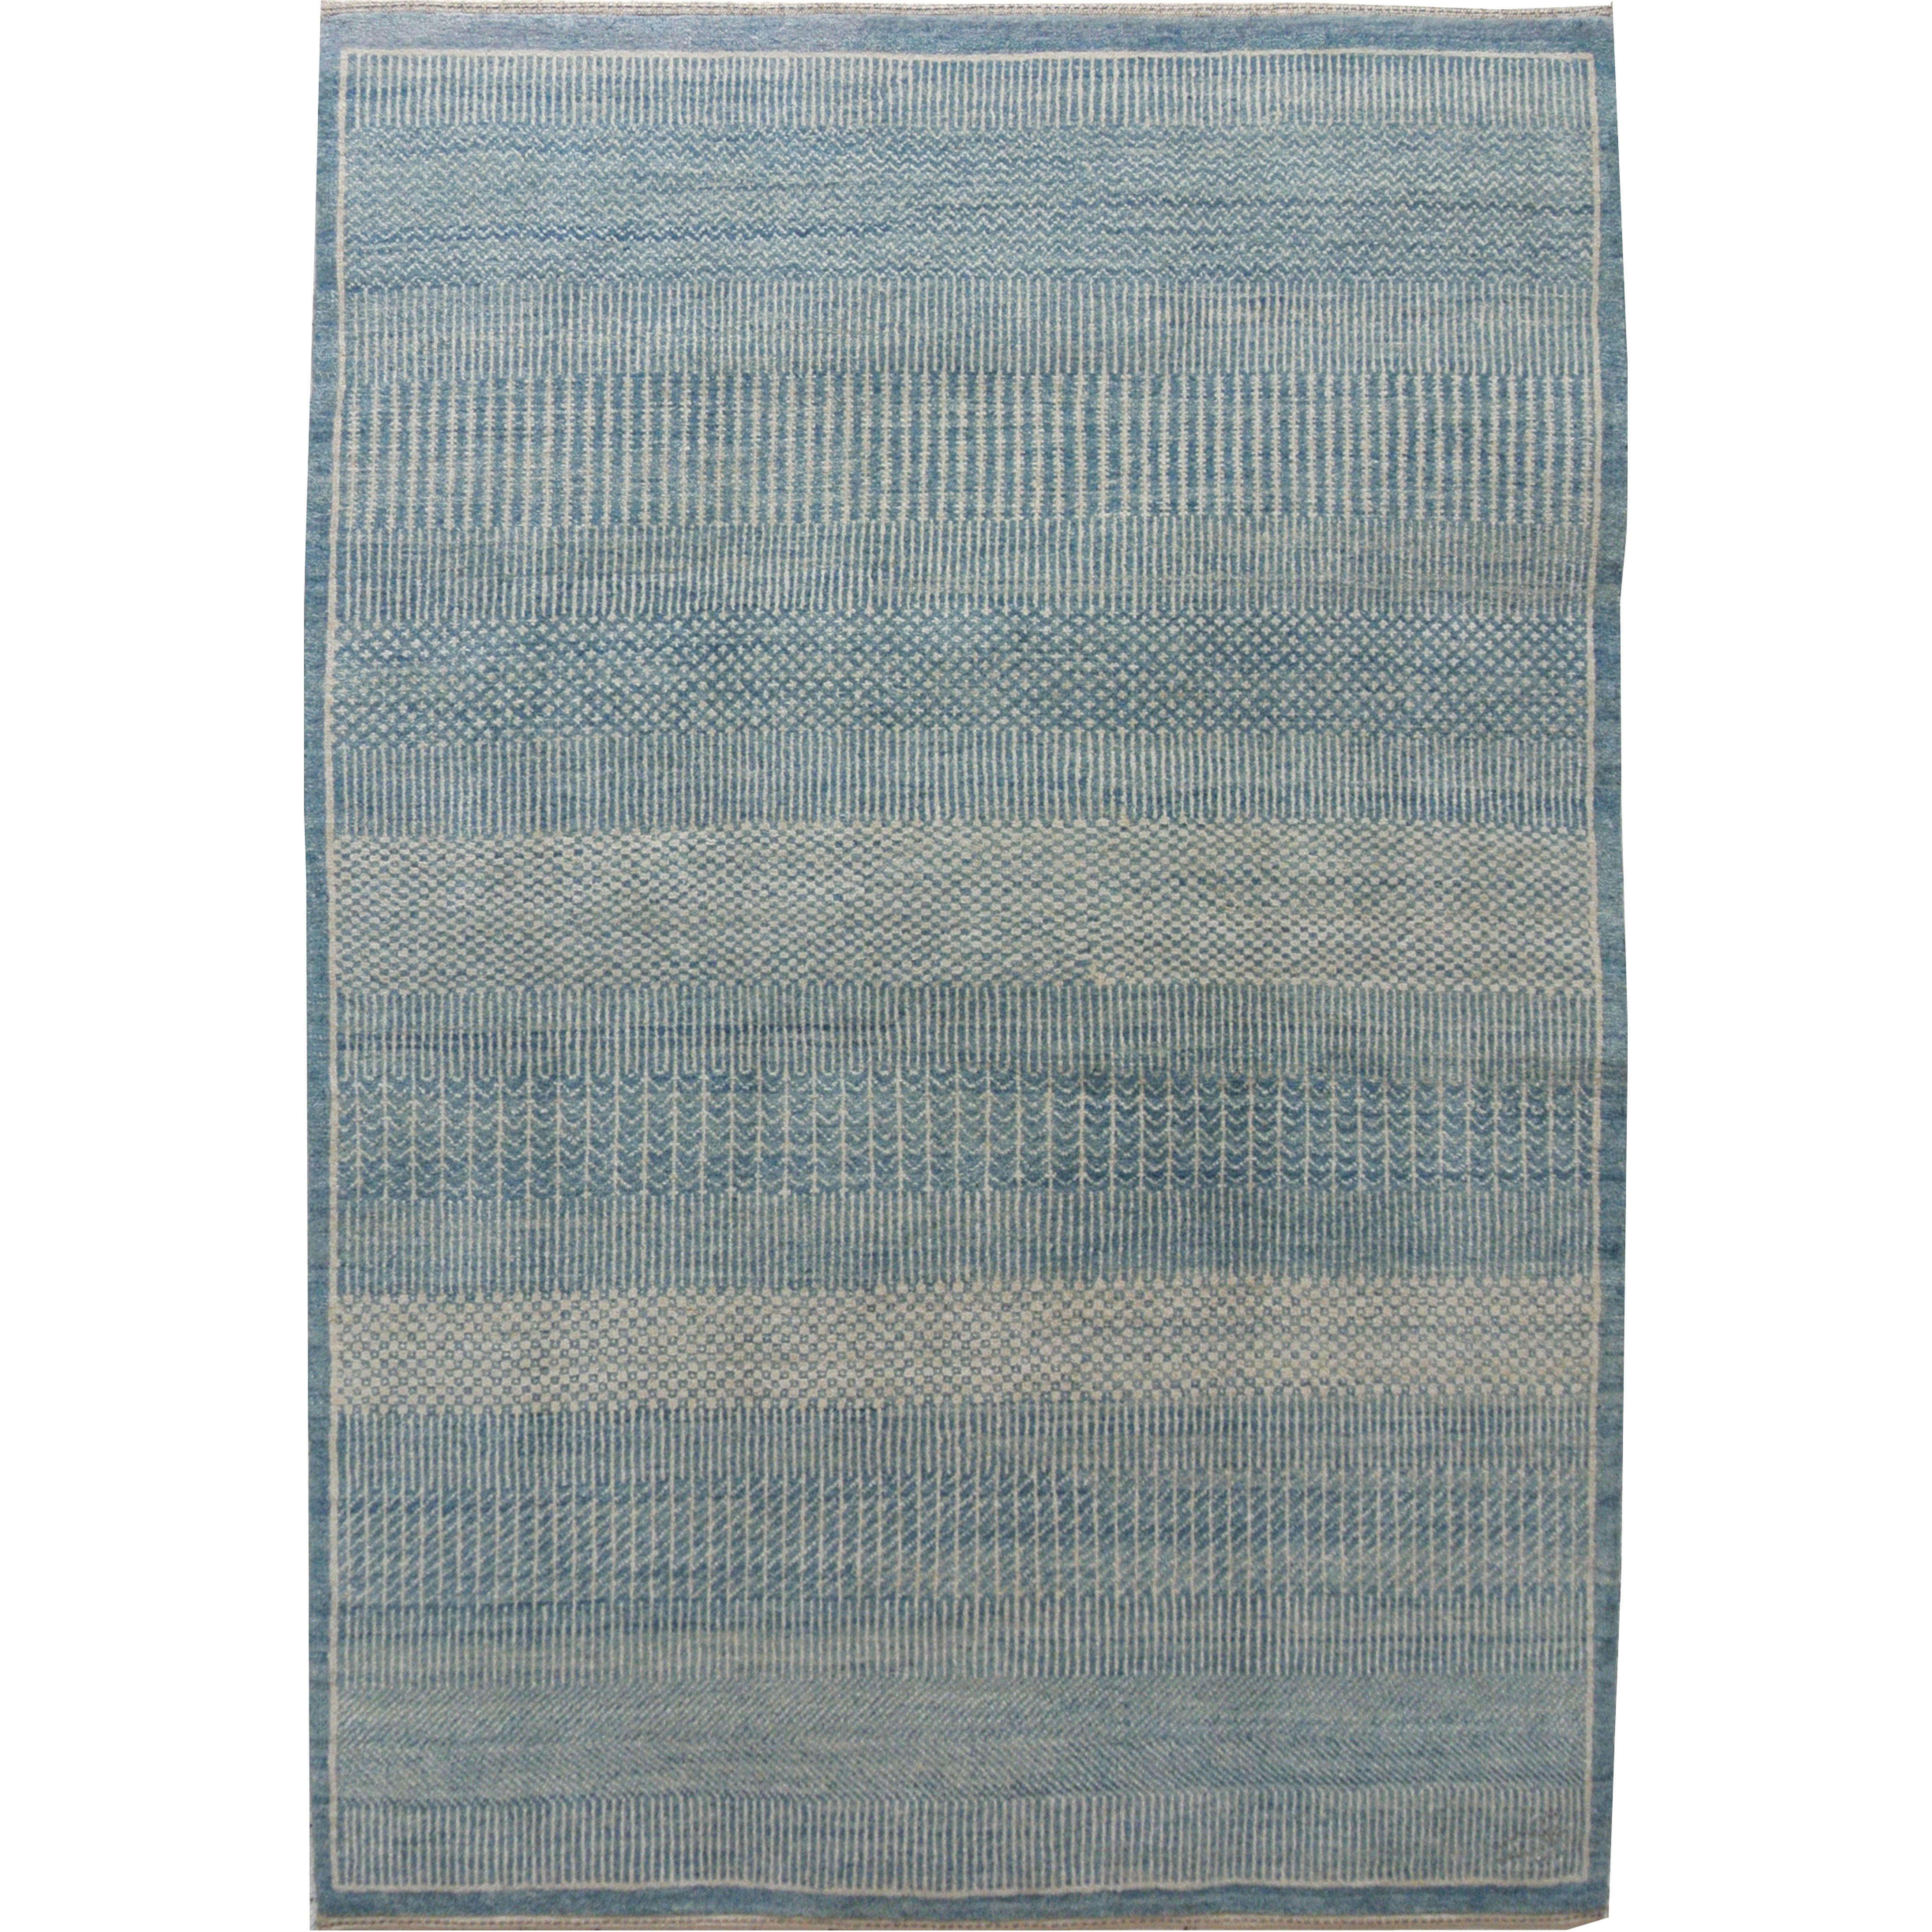 Orley Shabahang "Rain" Contemporary Persian Rug, Blue and Cream, 5' x 7'